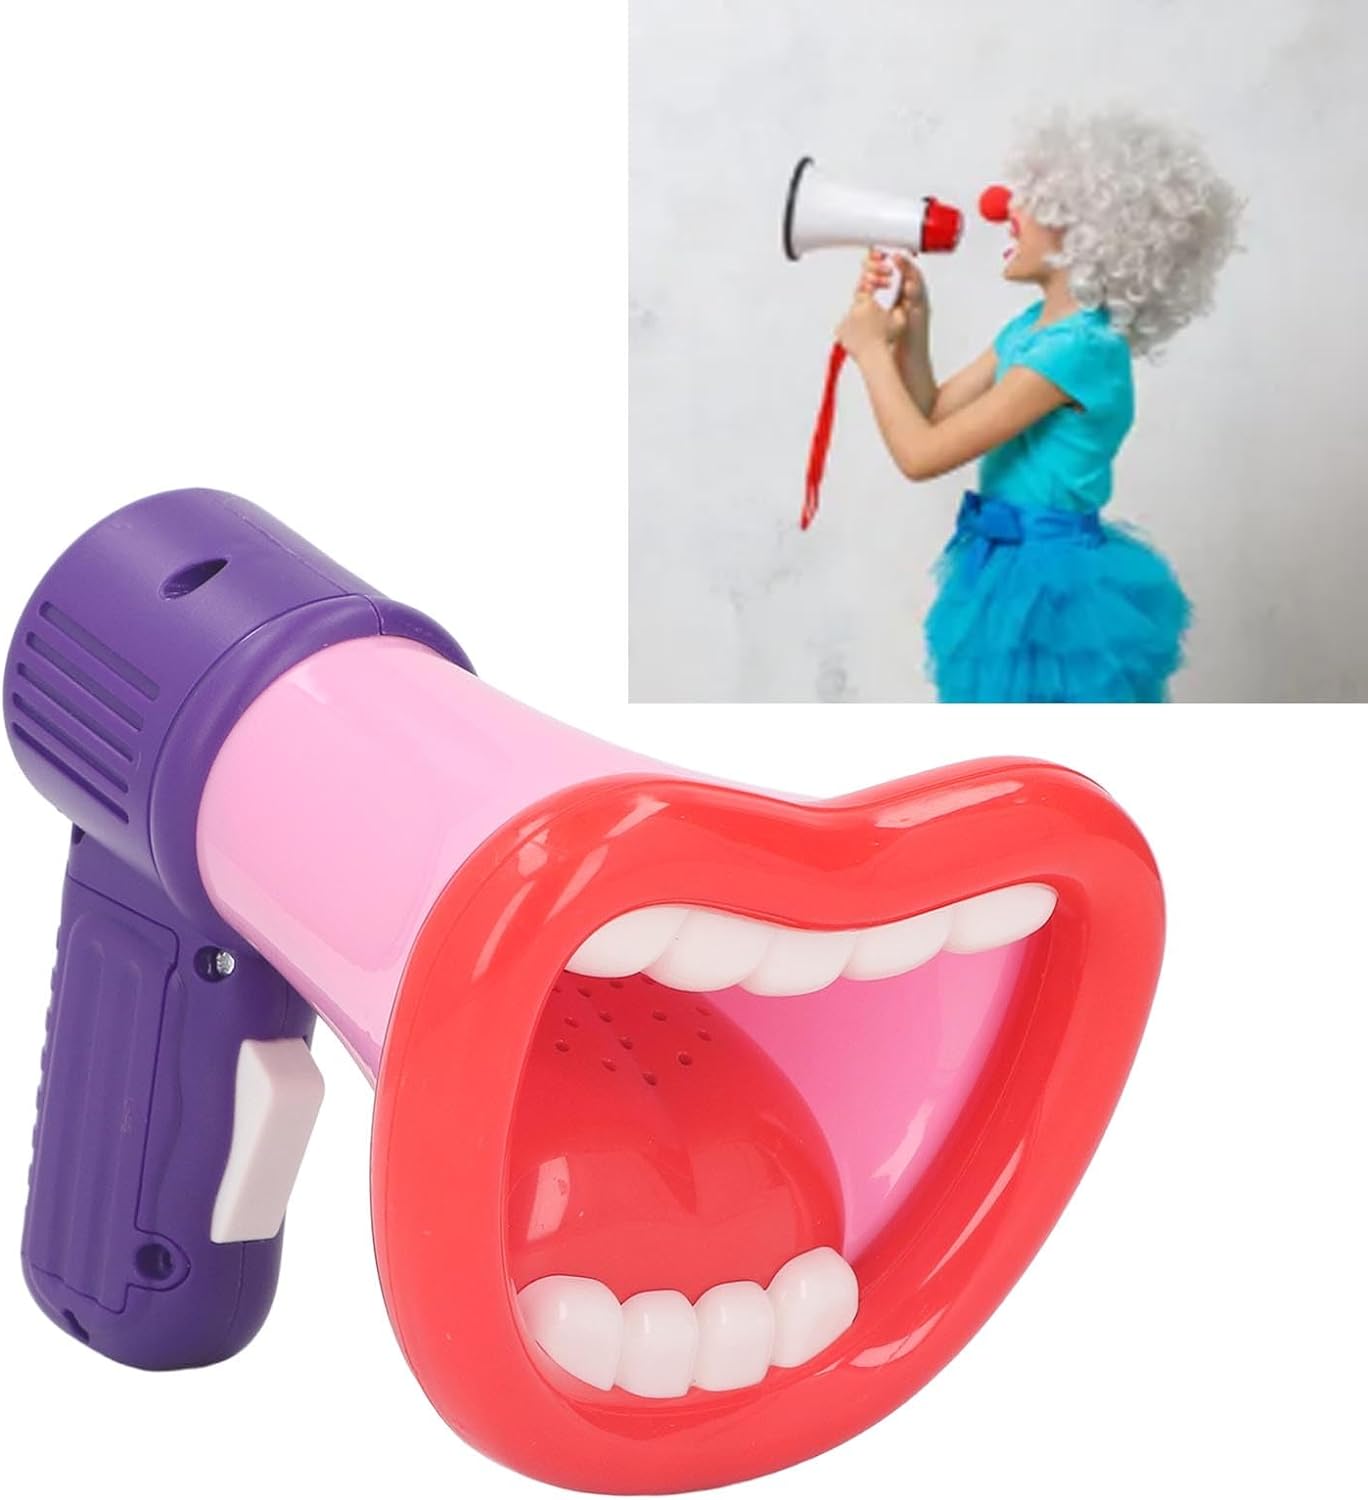 Kids Voice Changer, Big Mouth Shape Multi Voice Changer Toy Sound Effect Educational Recording Loud Speaker Trick Joke Toy